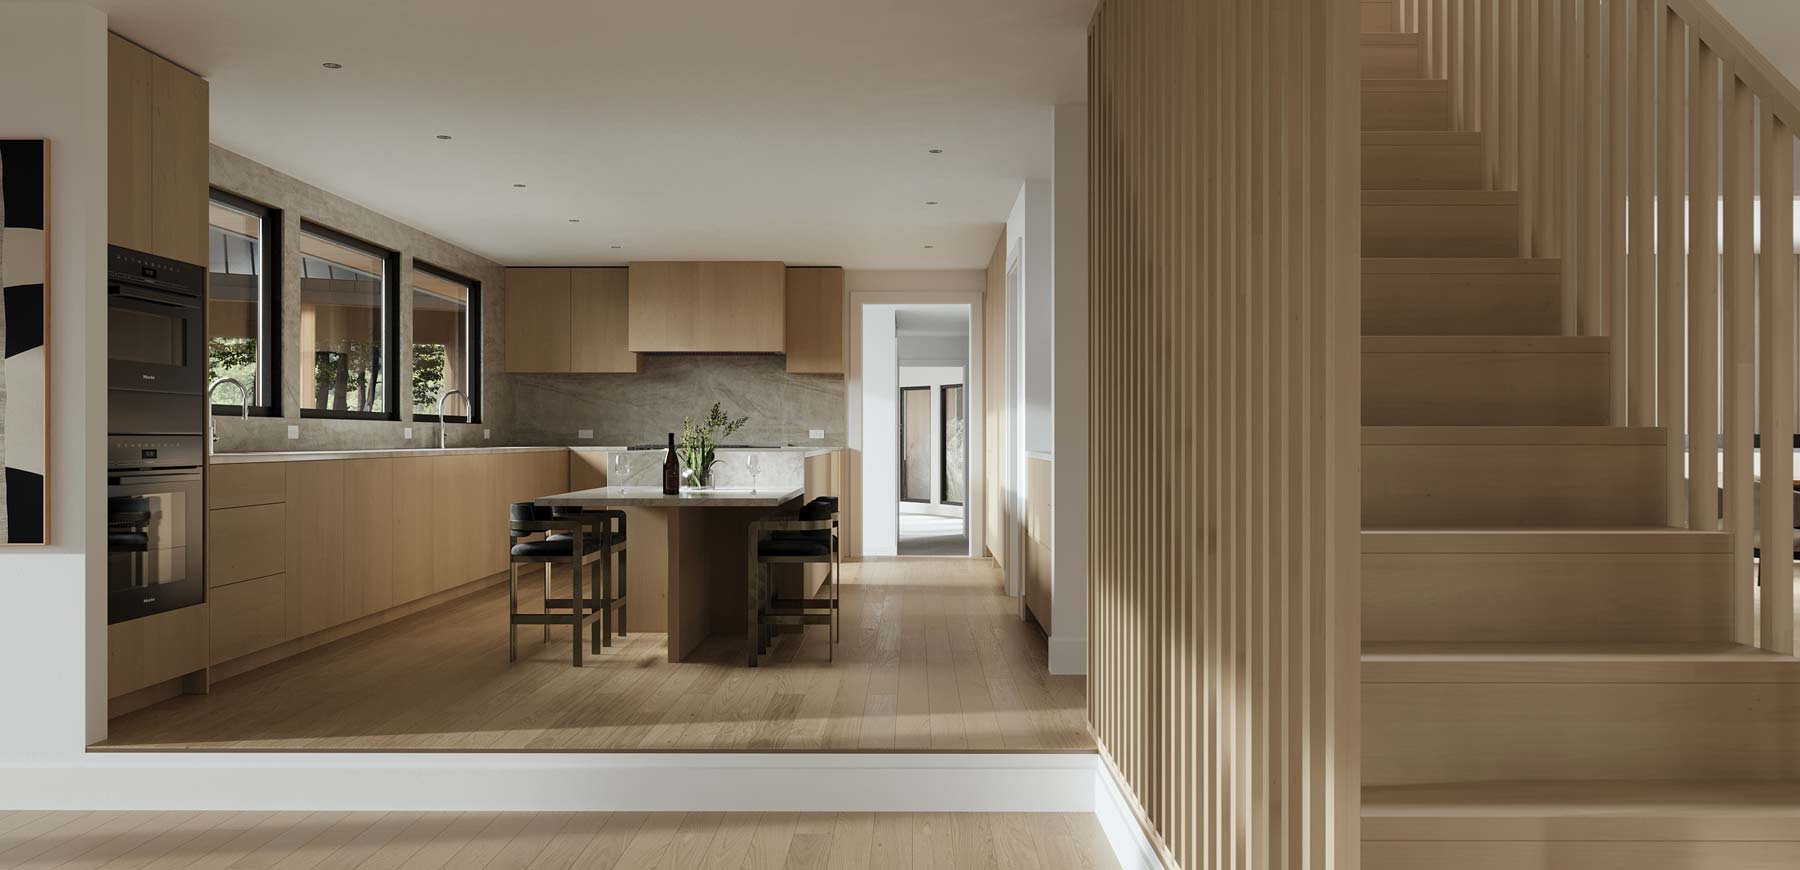 light wood modern kitchen design in custom new york home interior renovation